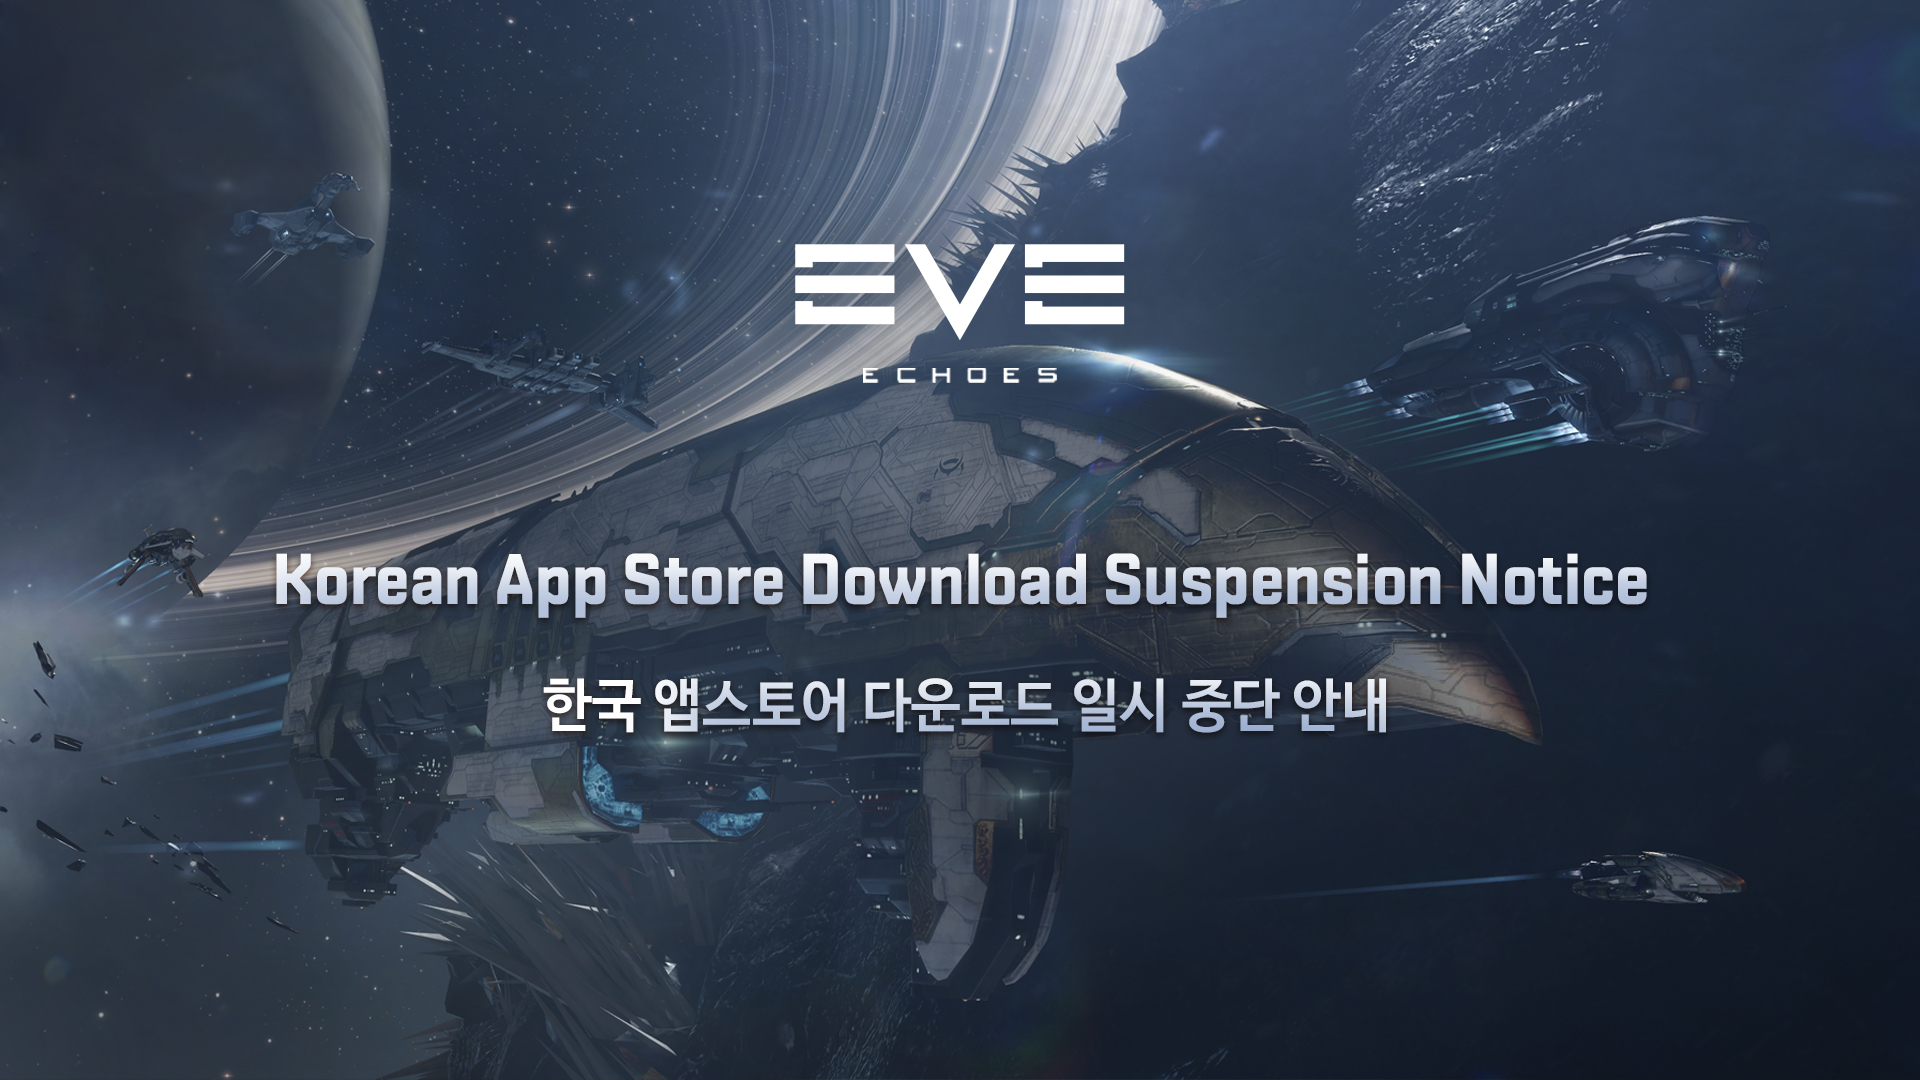 <EVE Echoes> Korean App Store Download Suspension Notice